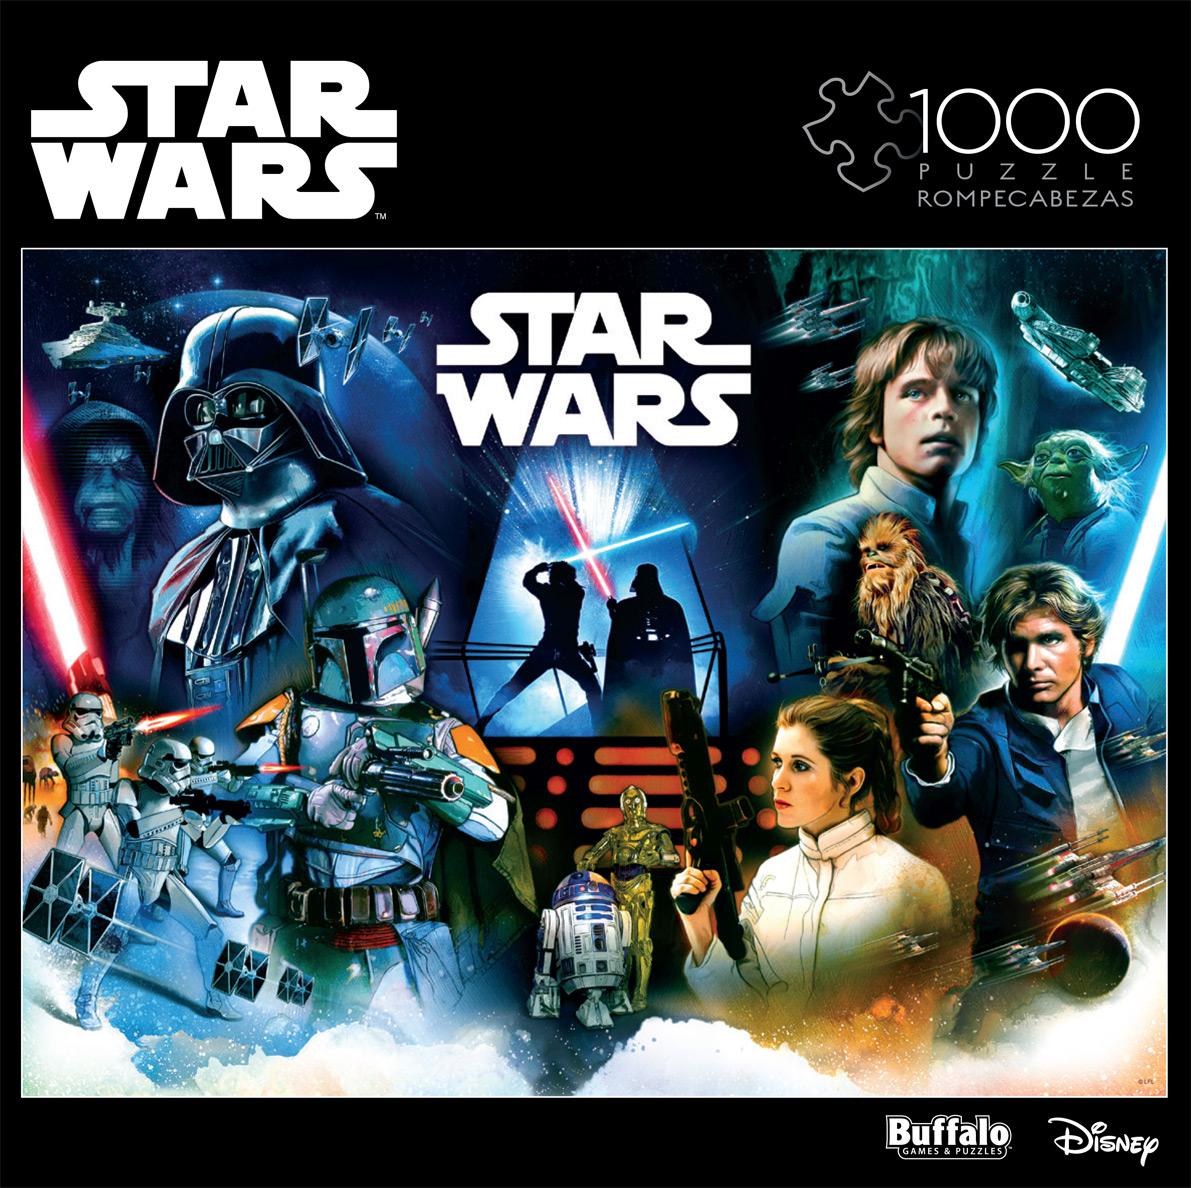 Star Wars Pinball Art 1000 Piece Jigsaw Puzzle for $10.97